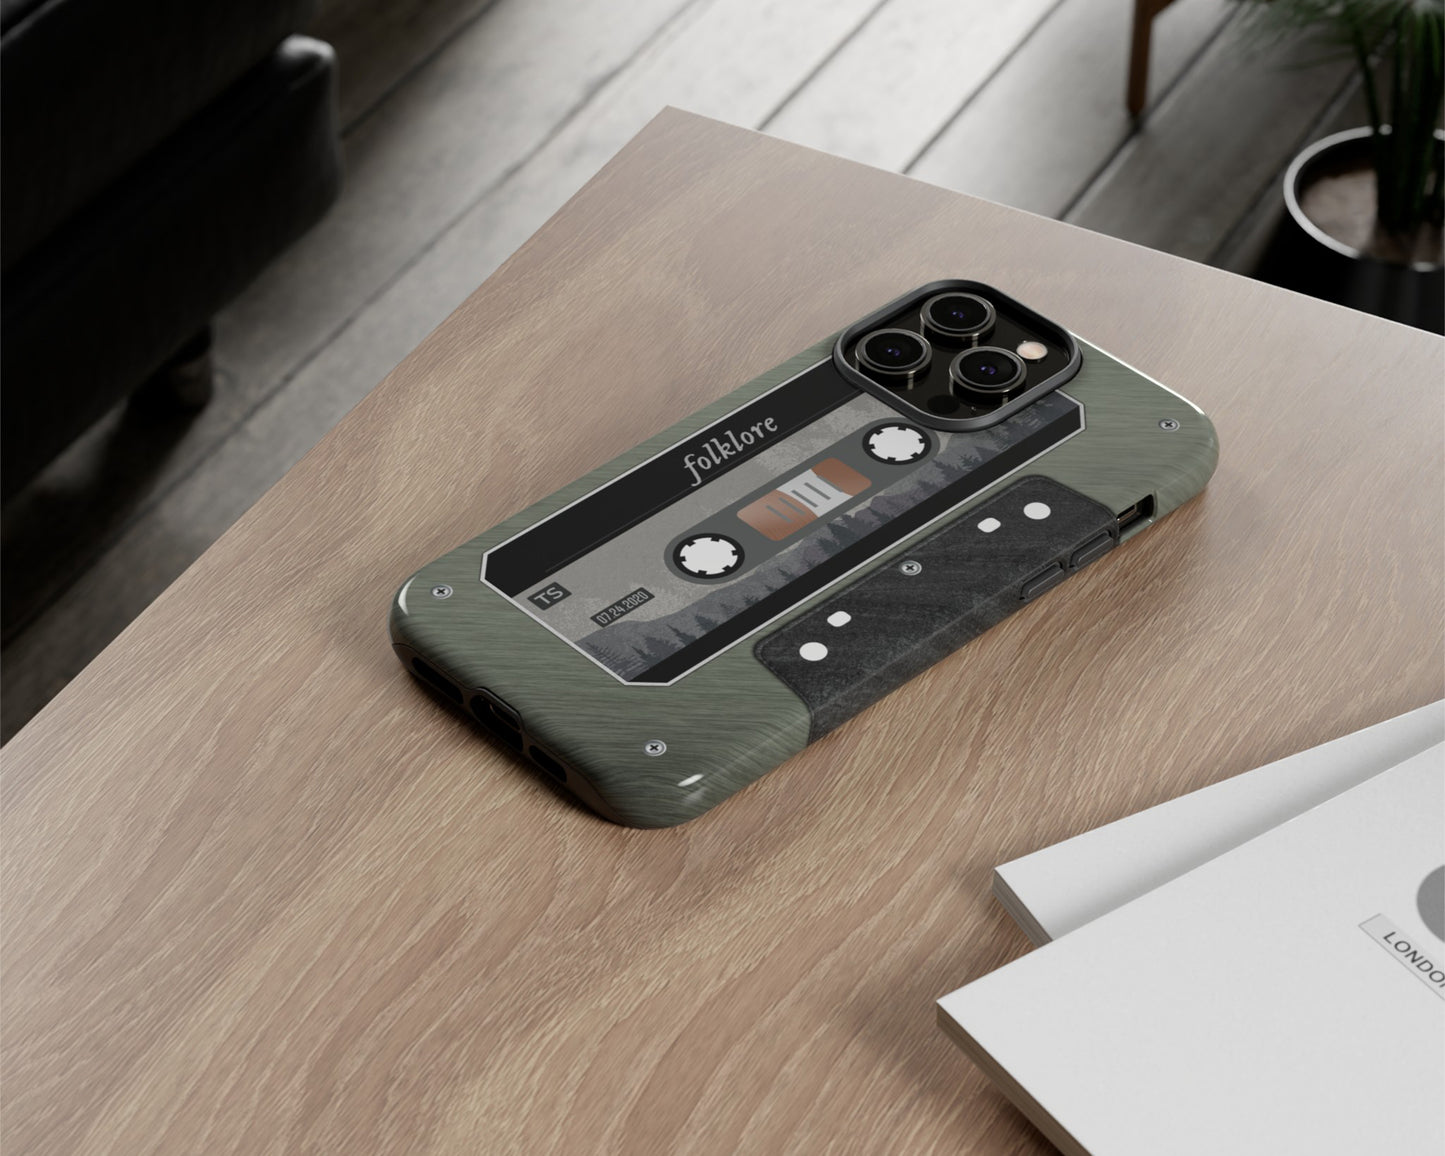 Folklore era cassette tape iPhone case